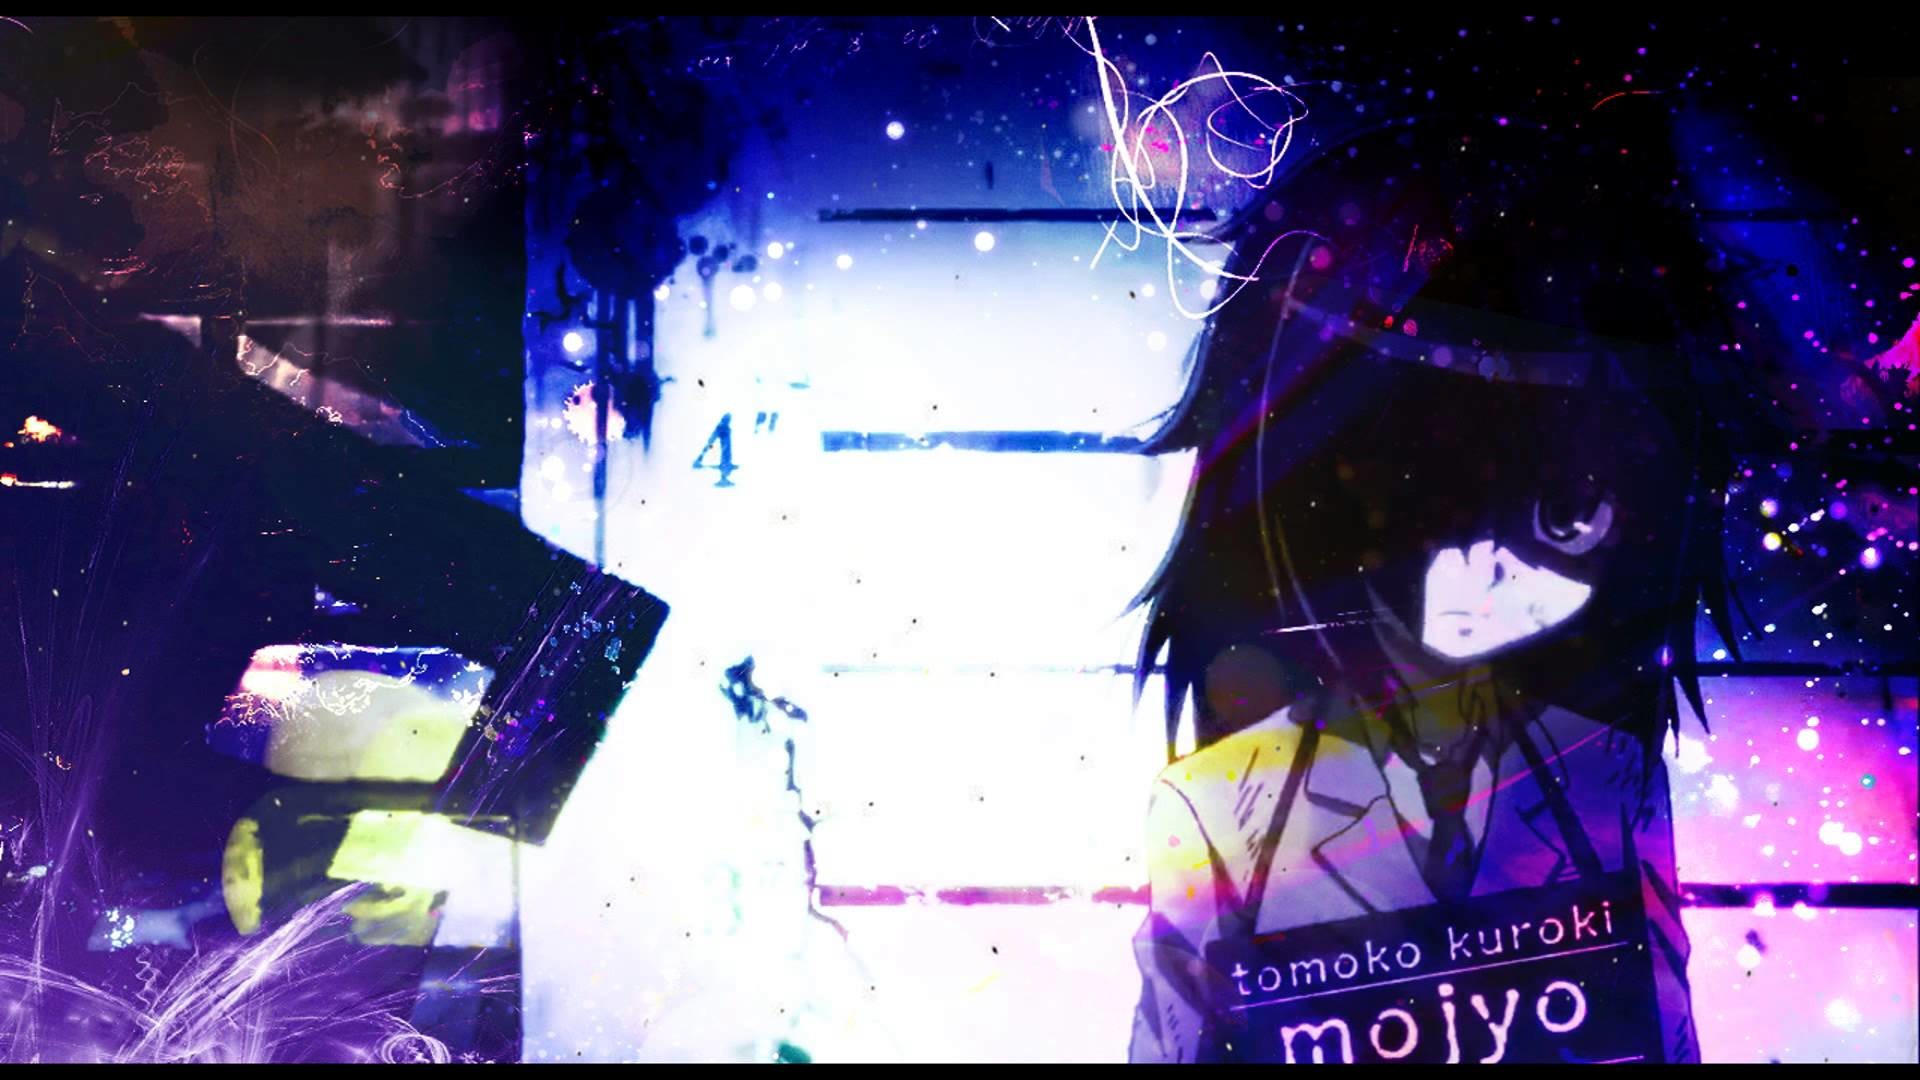 Desktop Wallpaper Minimal Anime Girl Music Head Phone Tomoko Kuroki Wata  Mote Hd Image Picture Background 6ed7cc